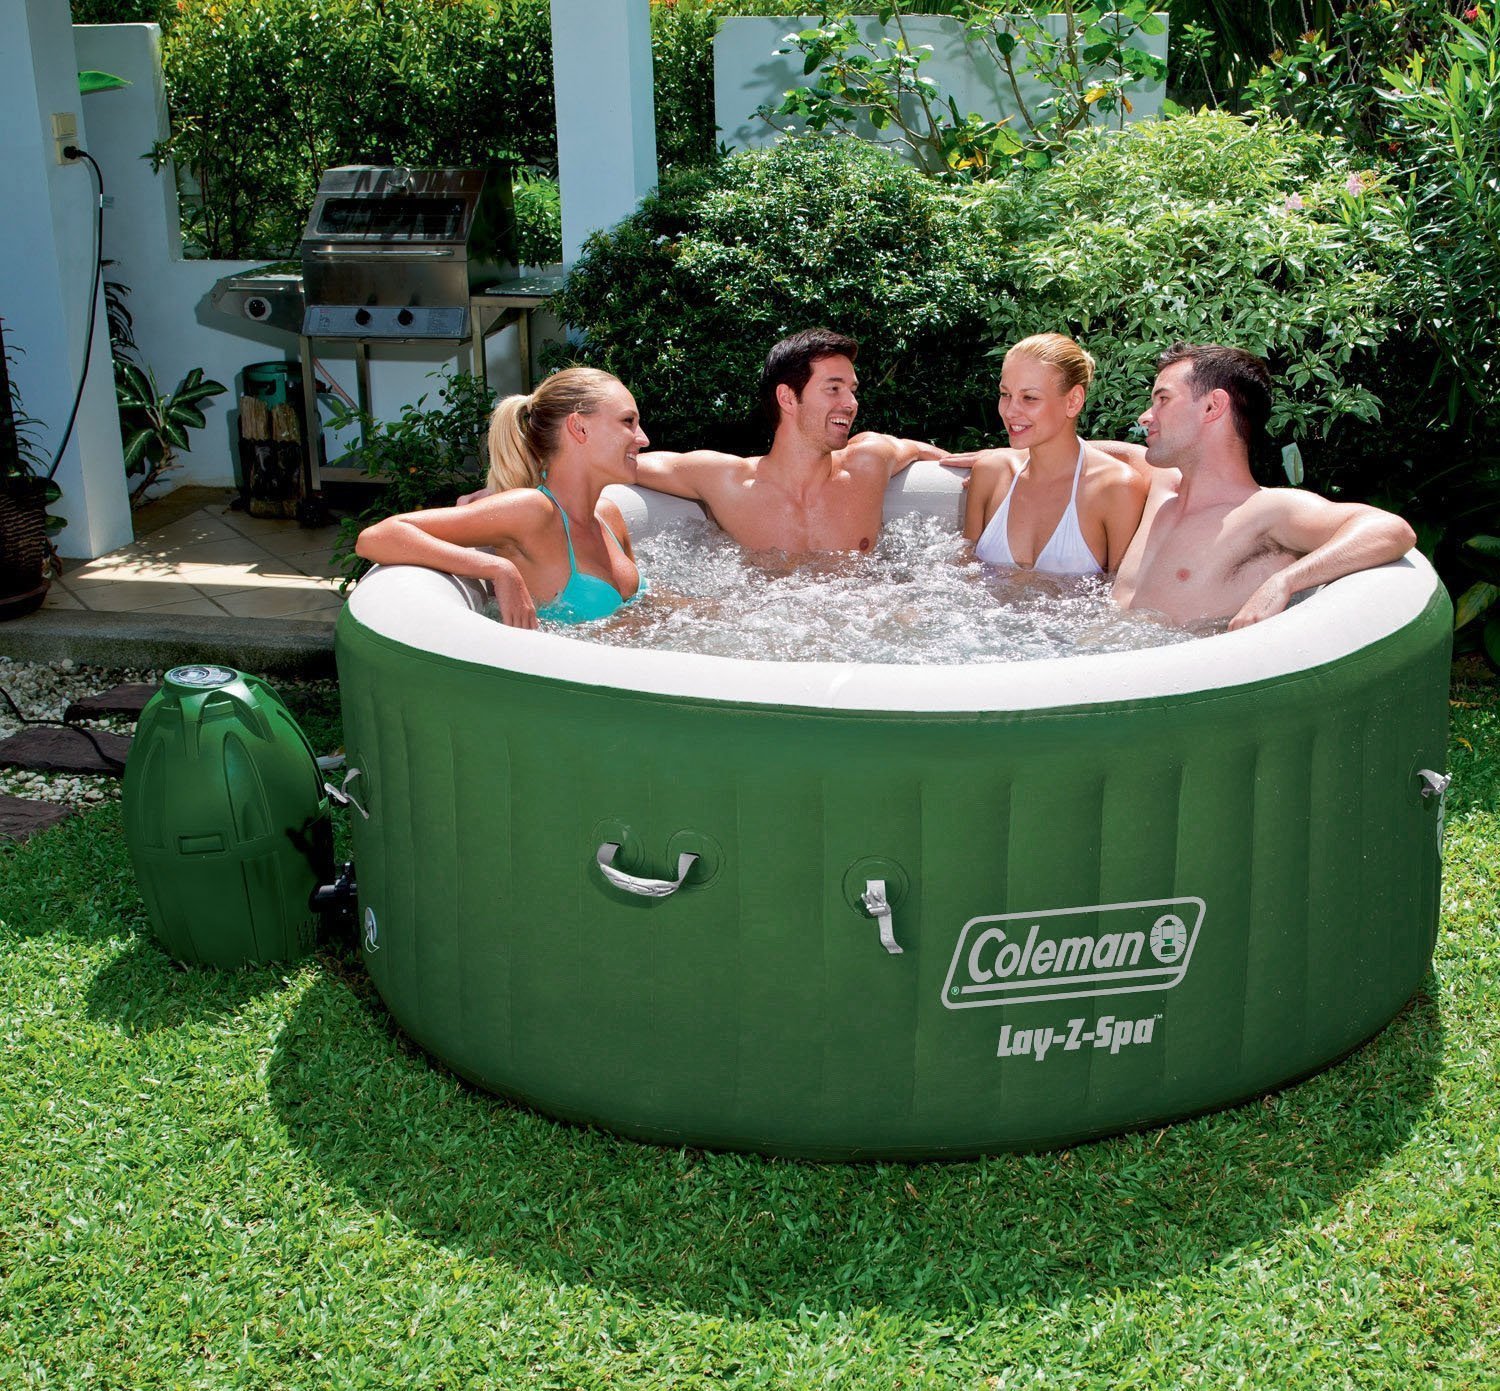 colemanlayzspainflatable4personhottub Hot Tub Digest